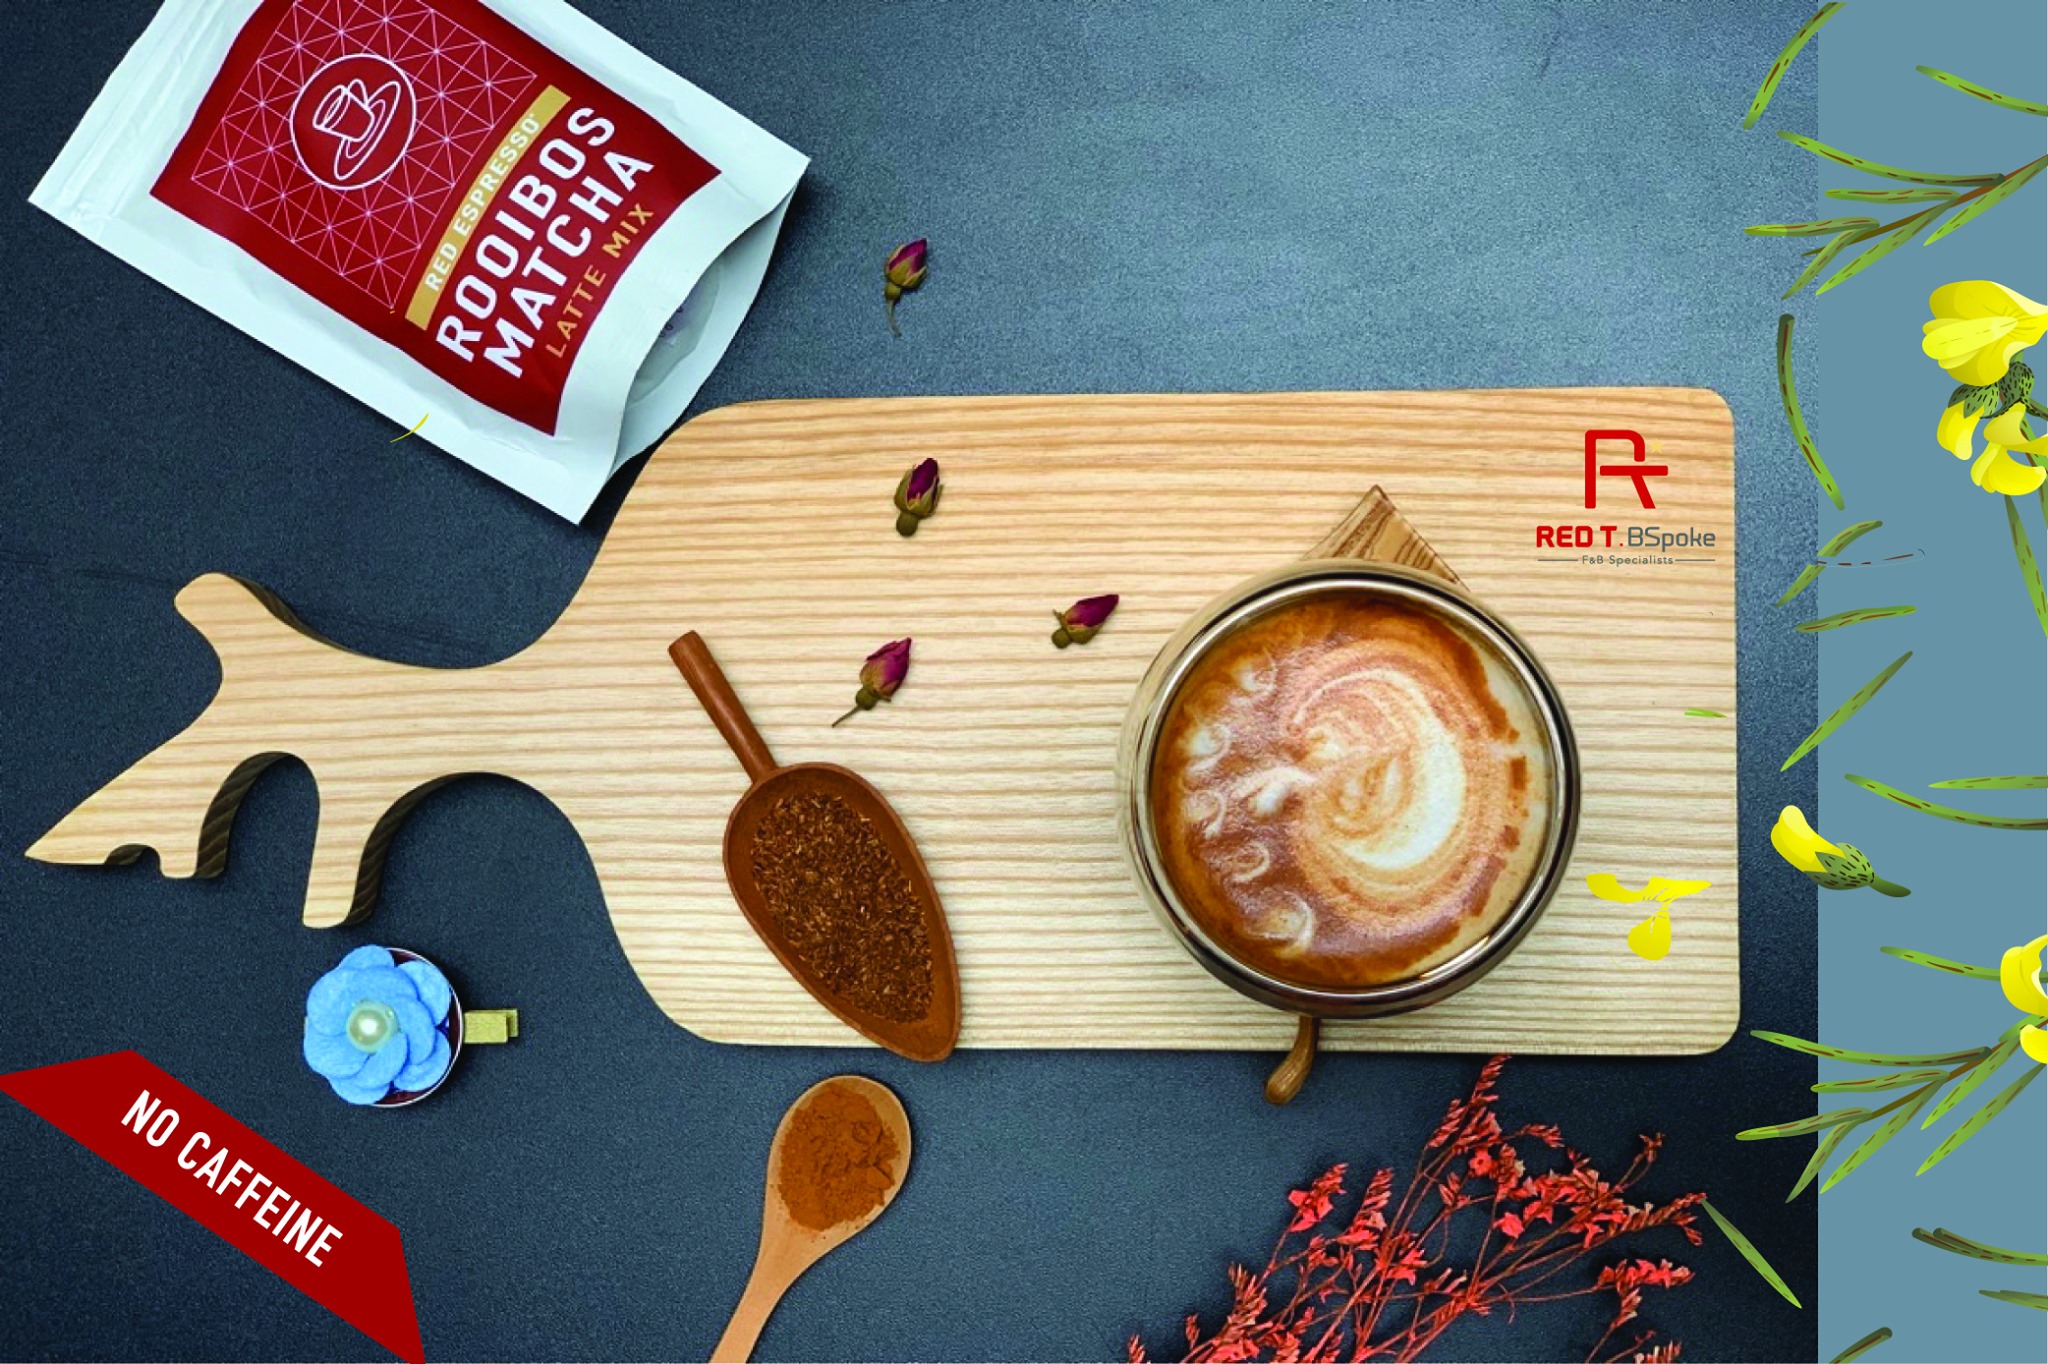 Bột Trà Đỏ Rooibos Matcha latte (Rooibos Matcha Latte Mix) - Superfood